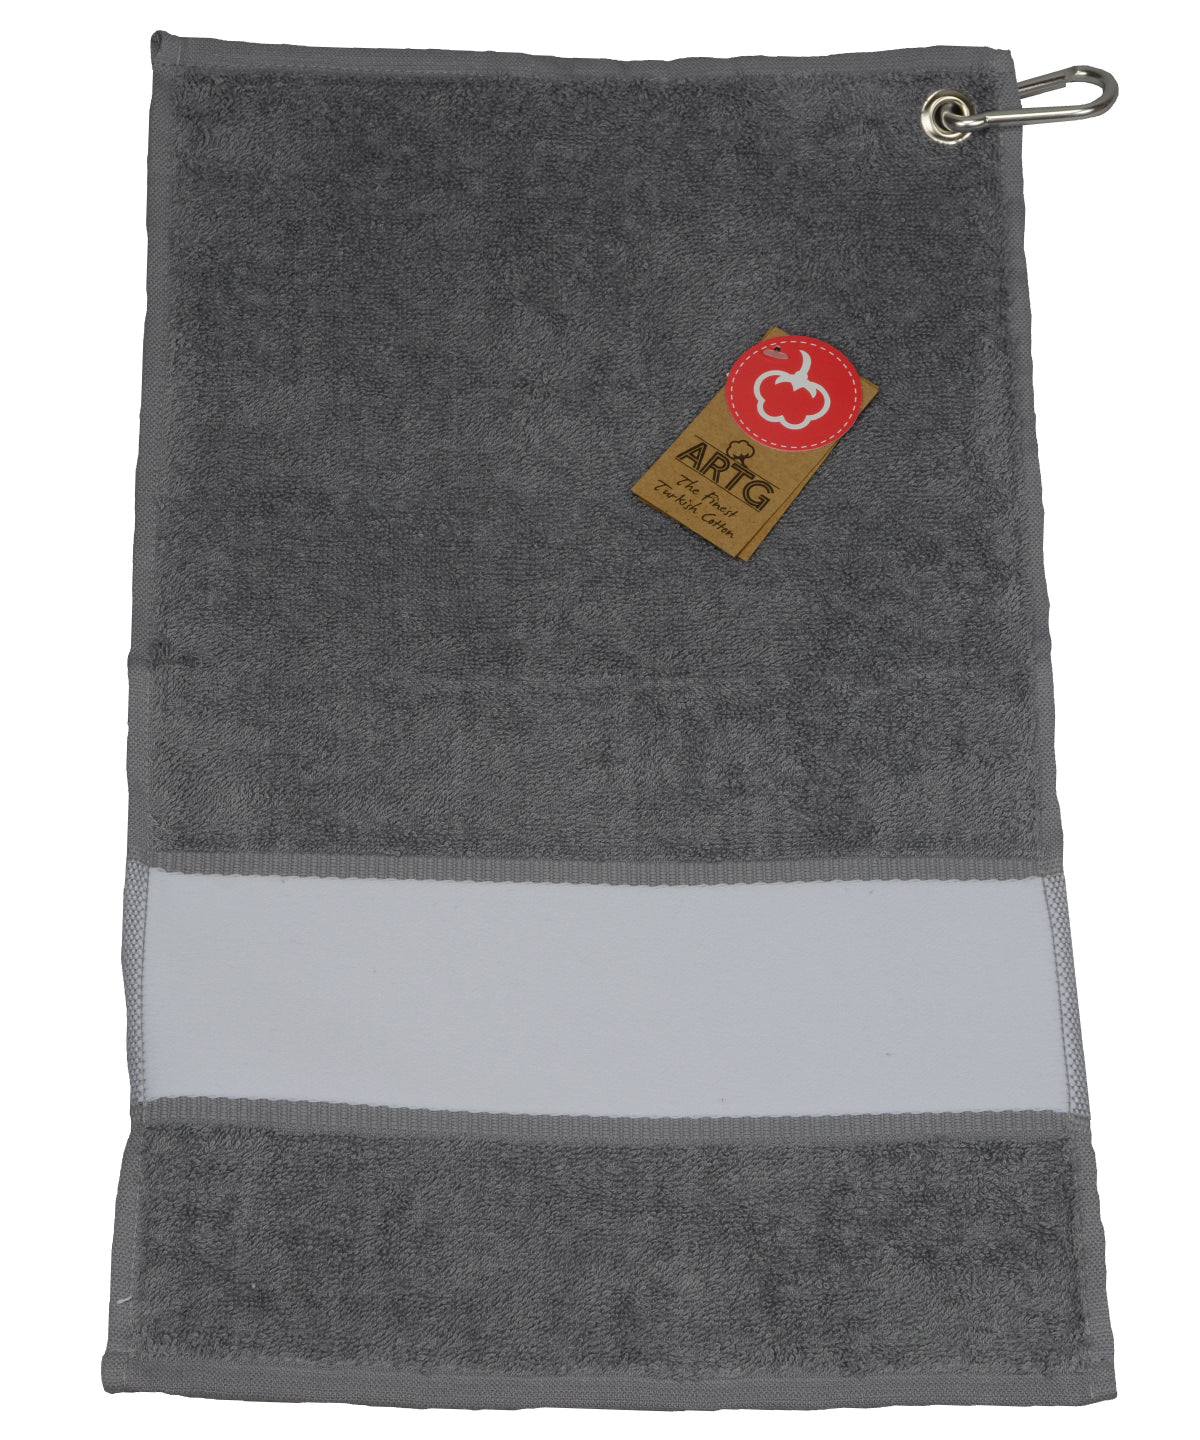 Personalised Towels - Dark Grey A&R Towels ARTG® SUBLI-Me® golf towel